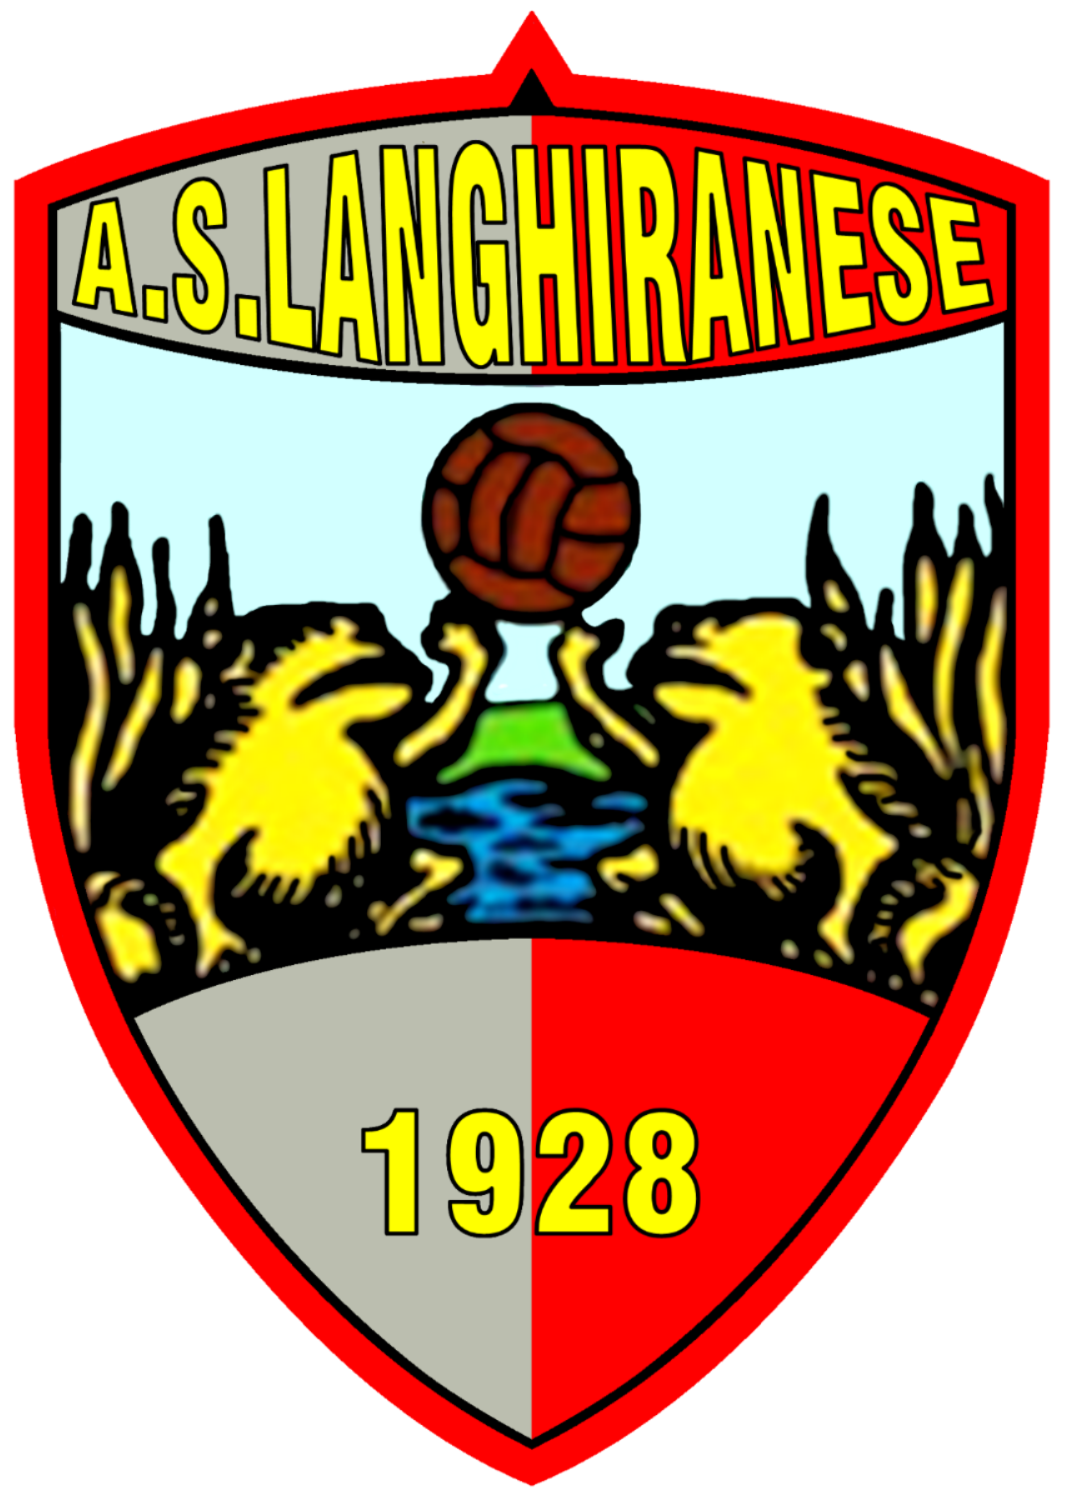 Langhiranese